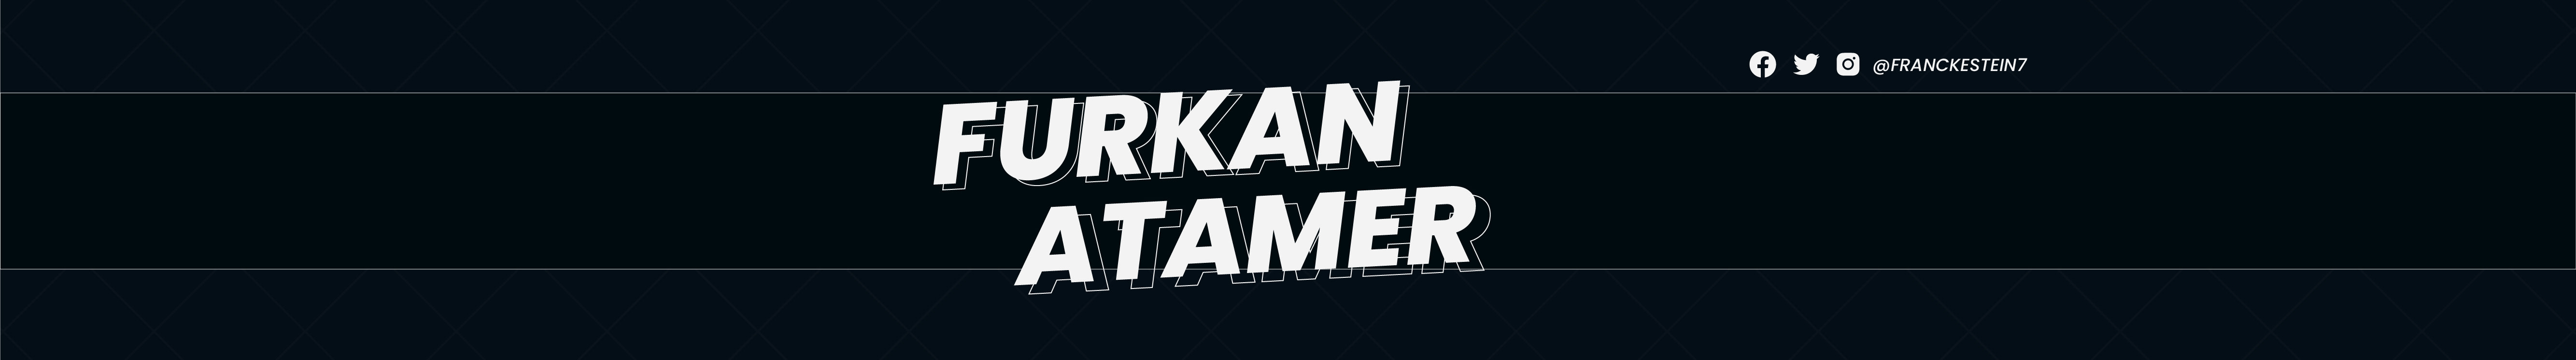 Banner de perfil de Furkan Atamer